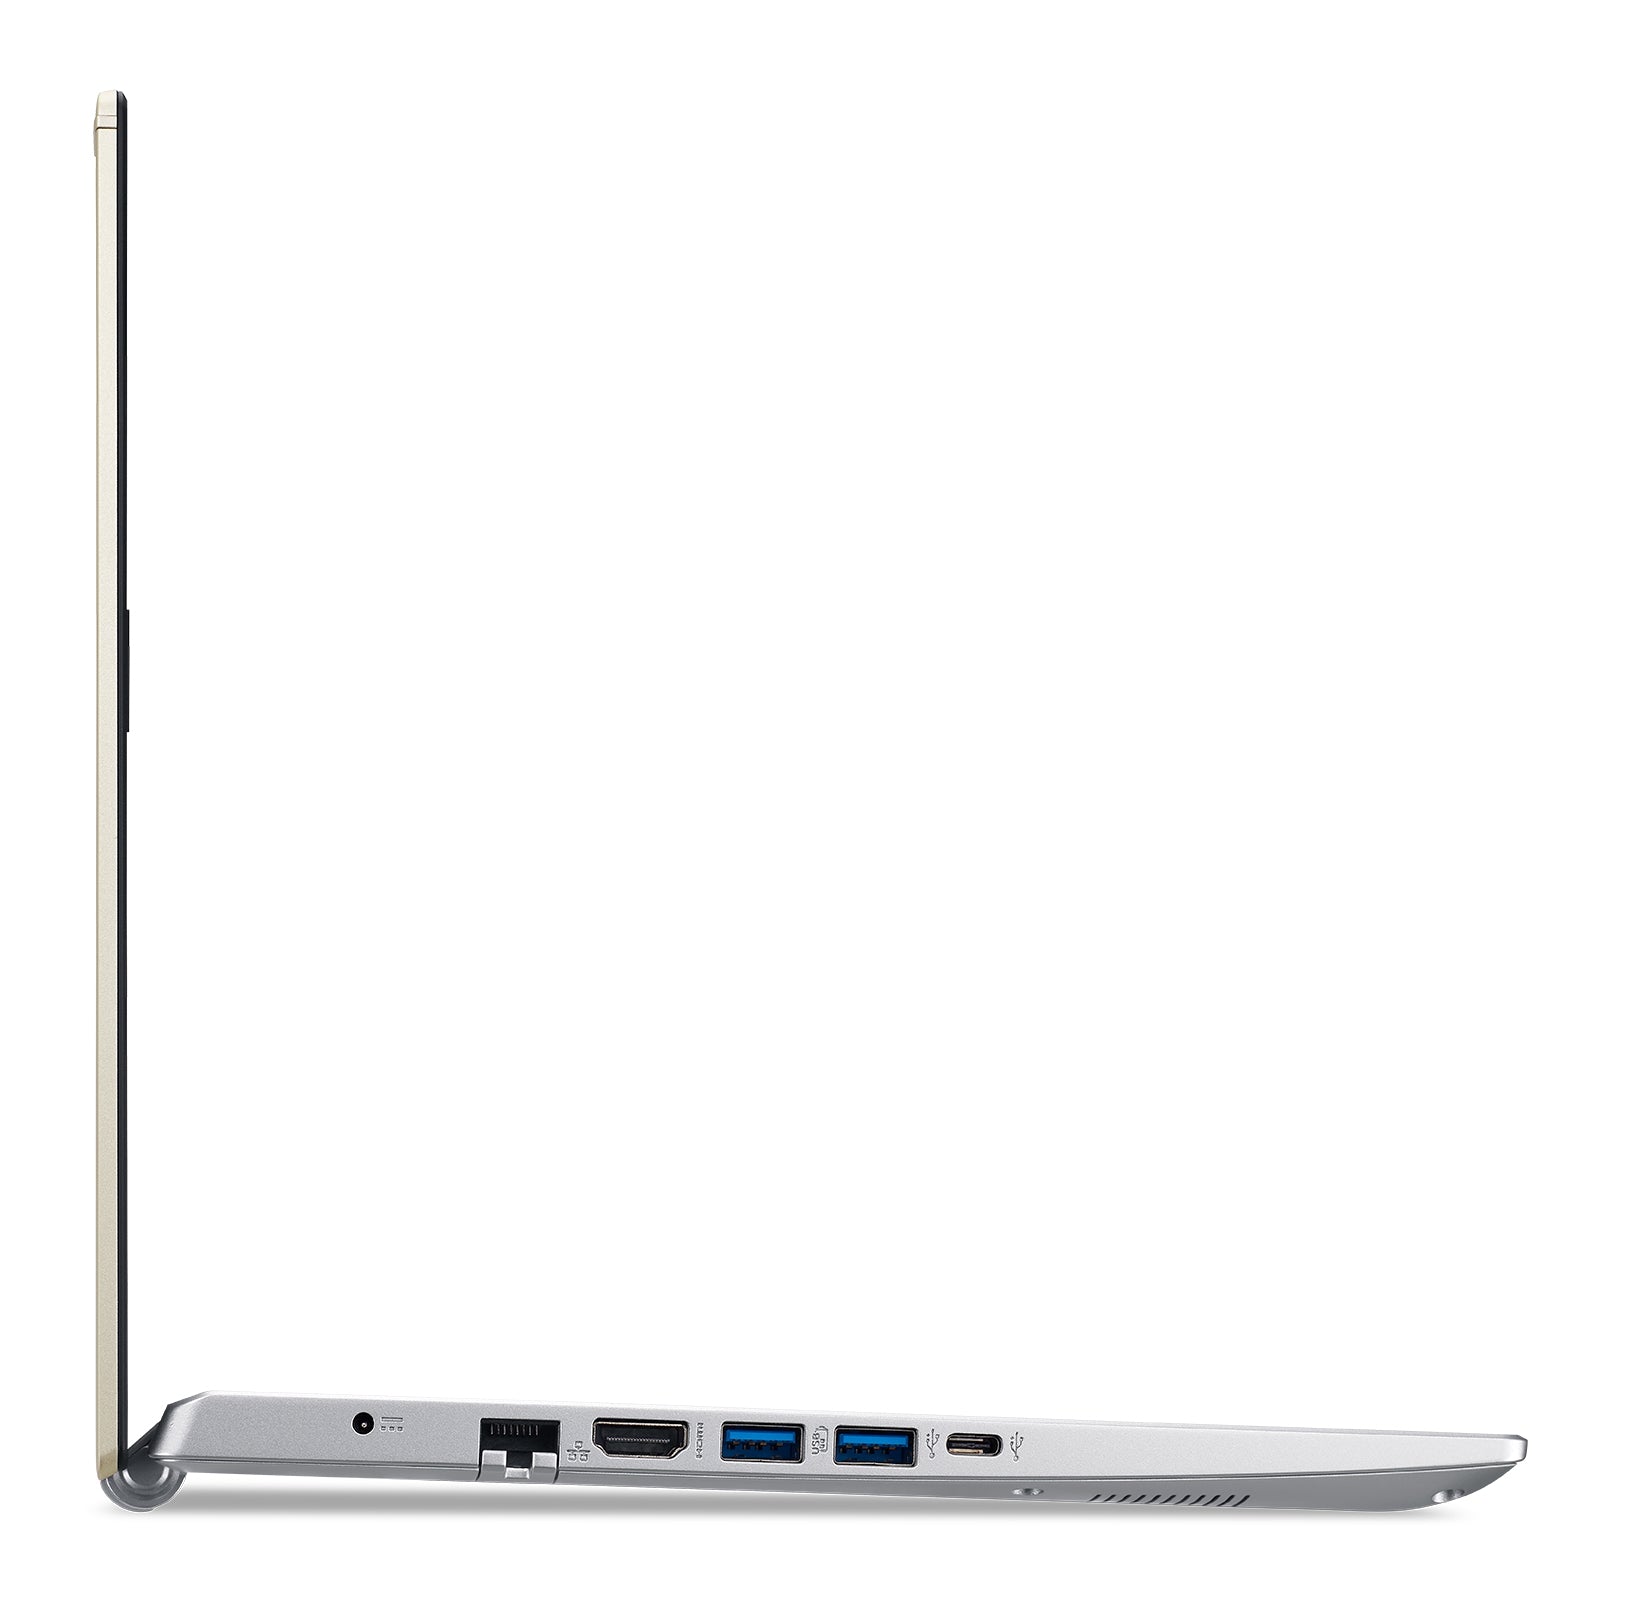 Laptop Acer Aspire 5 A514-54-501Z Pulgadas Full Hd Intel Core I5-1135G7 Ram 8Gb Ssd 256Gb Windows 10 Home Ingles Contacta Pm Para Garantía